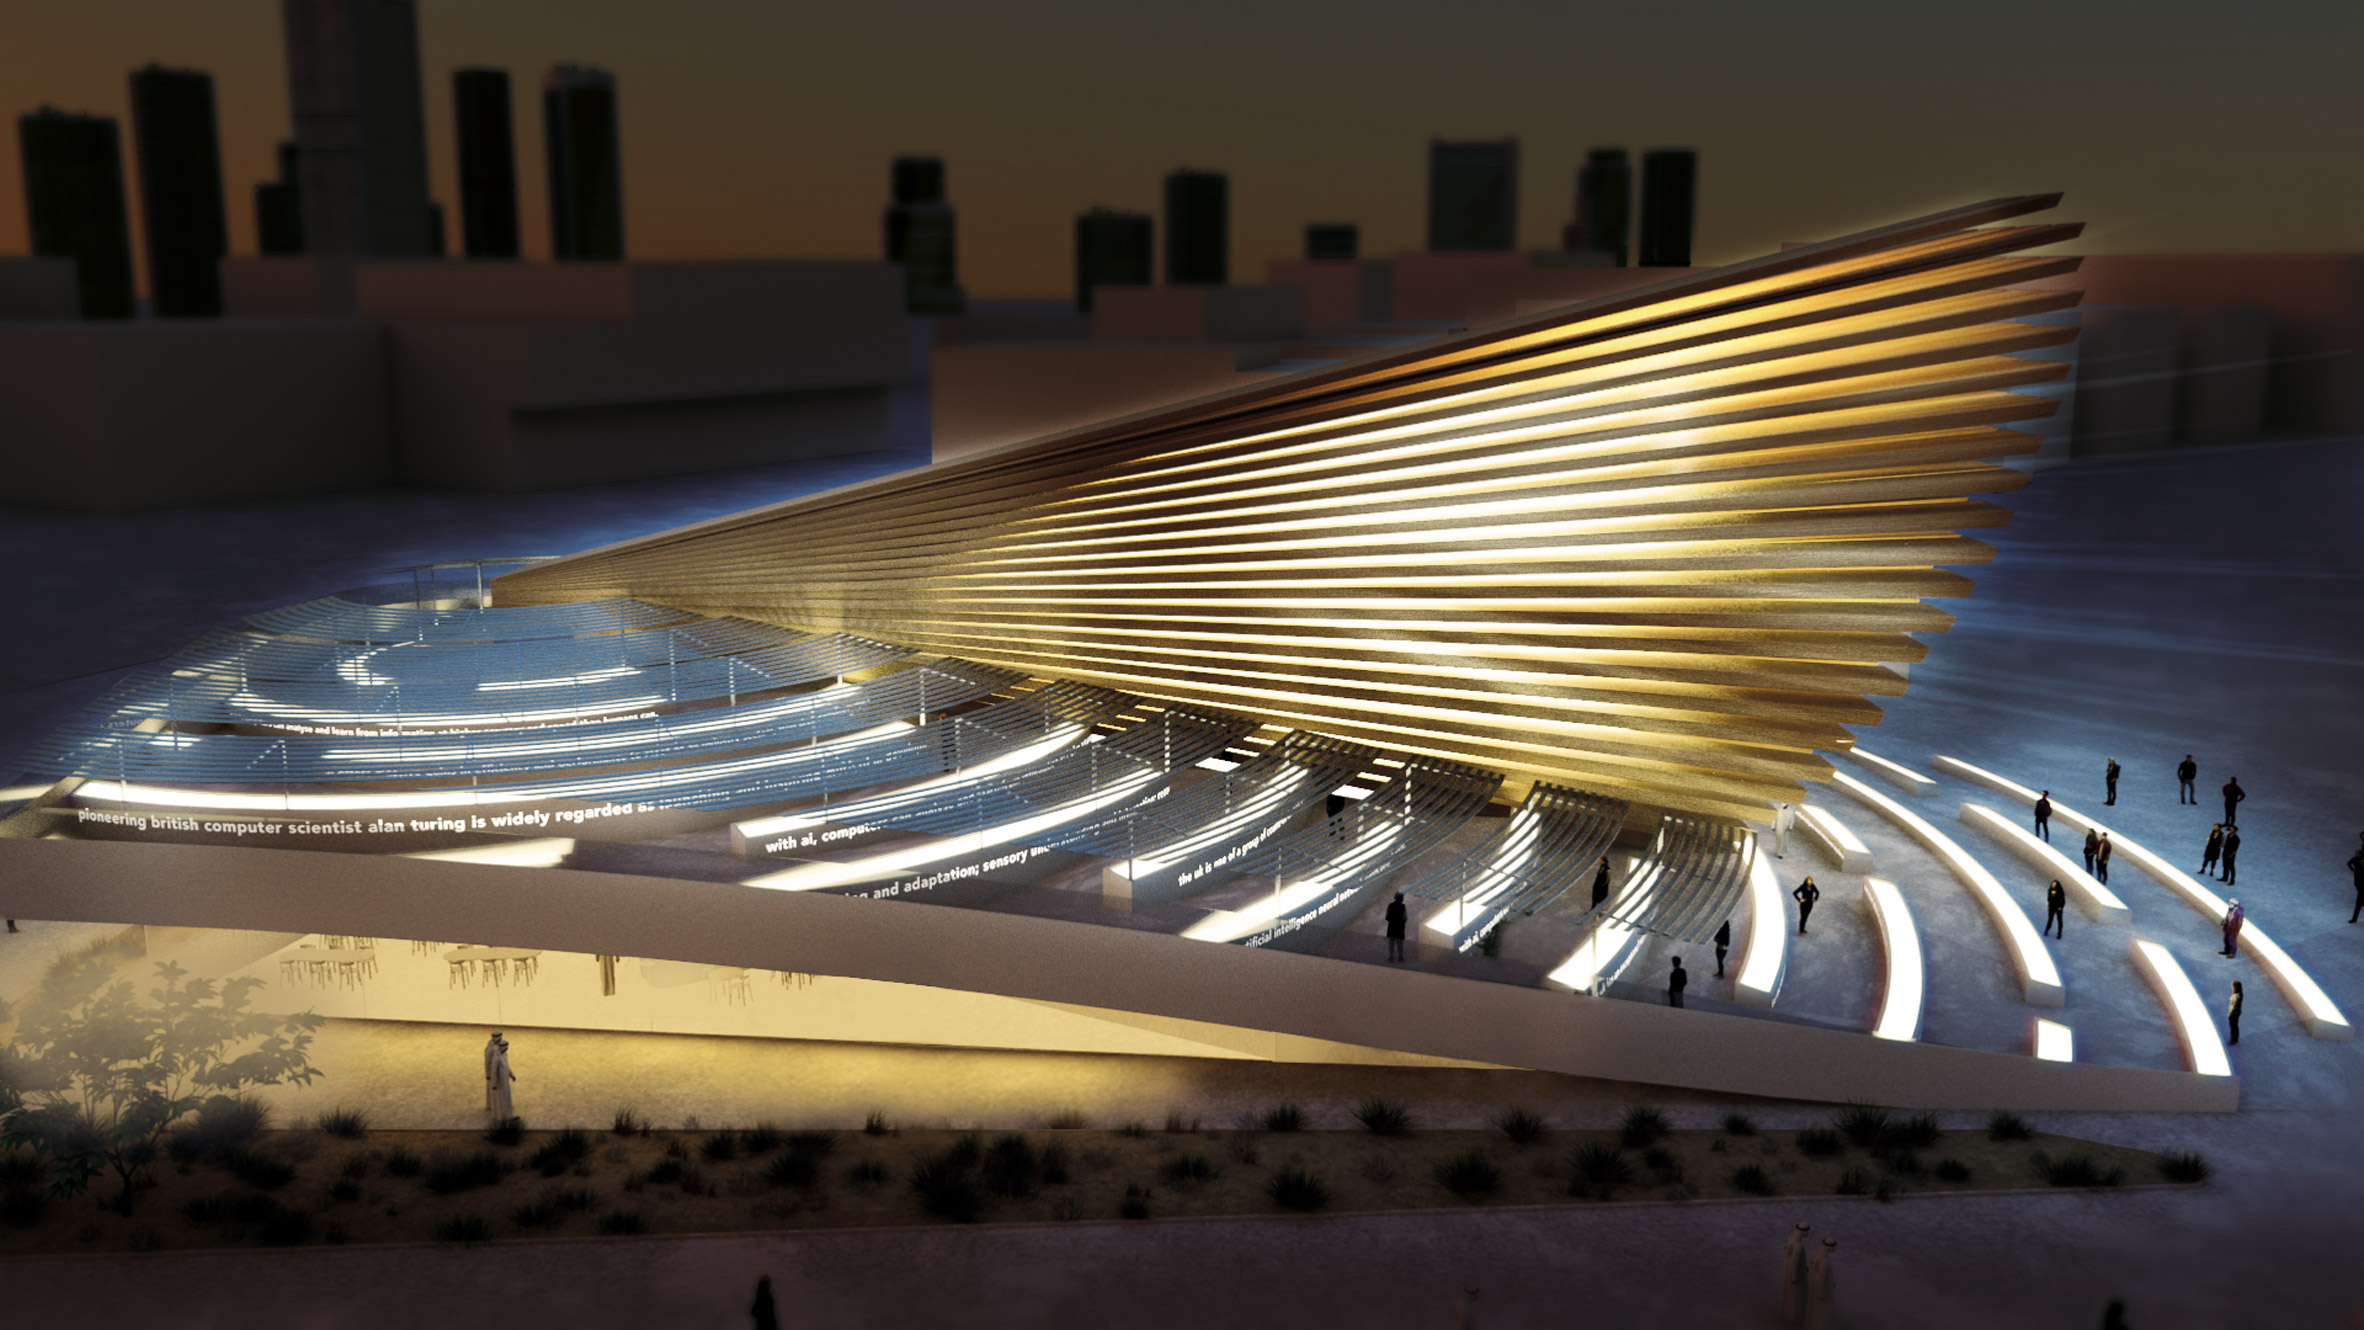 Scenes from Dubai's Expo 2020